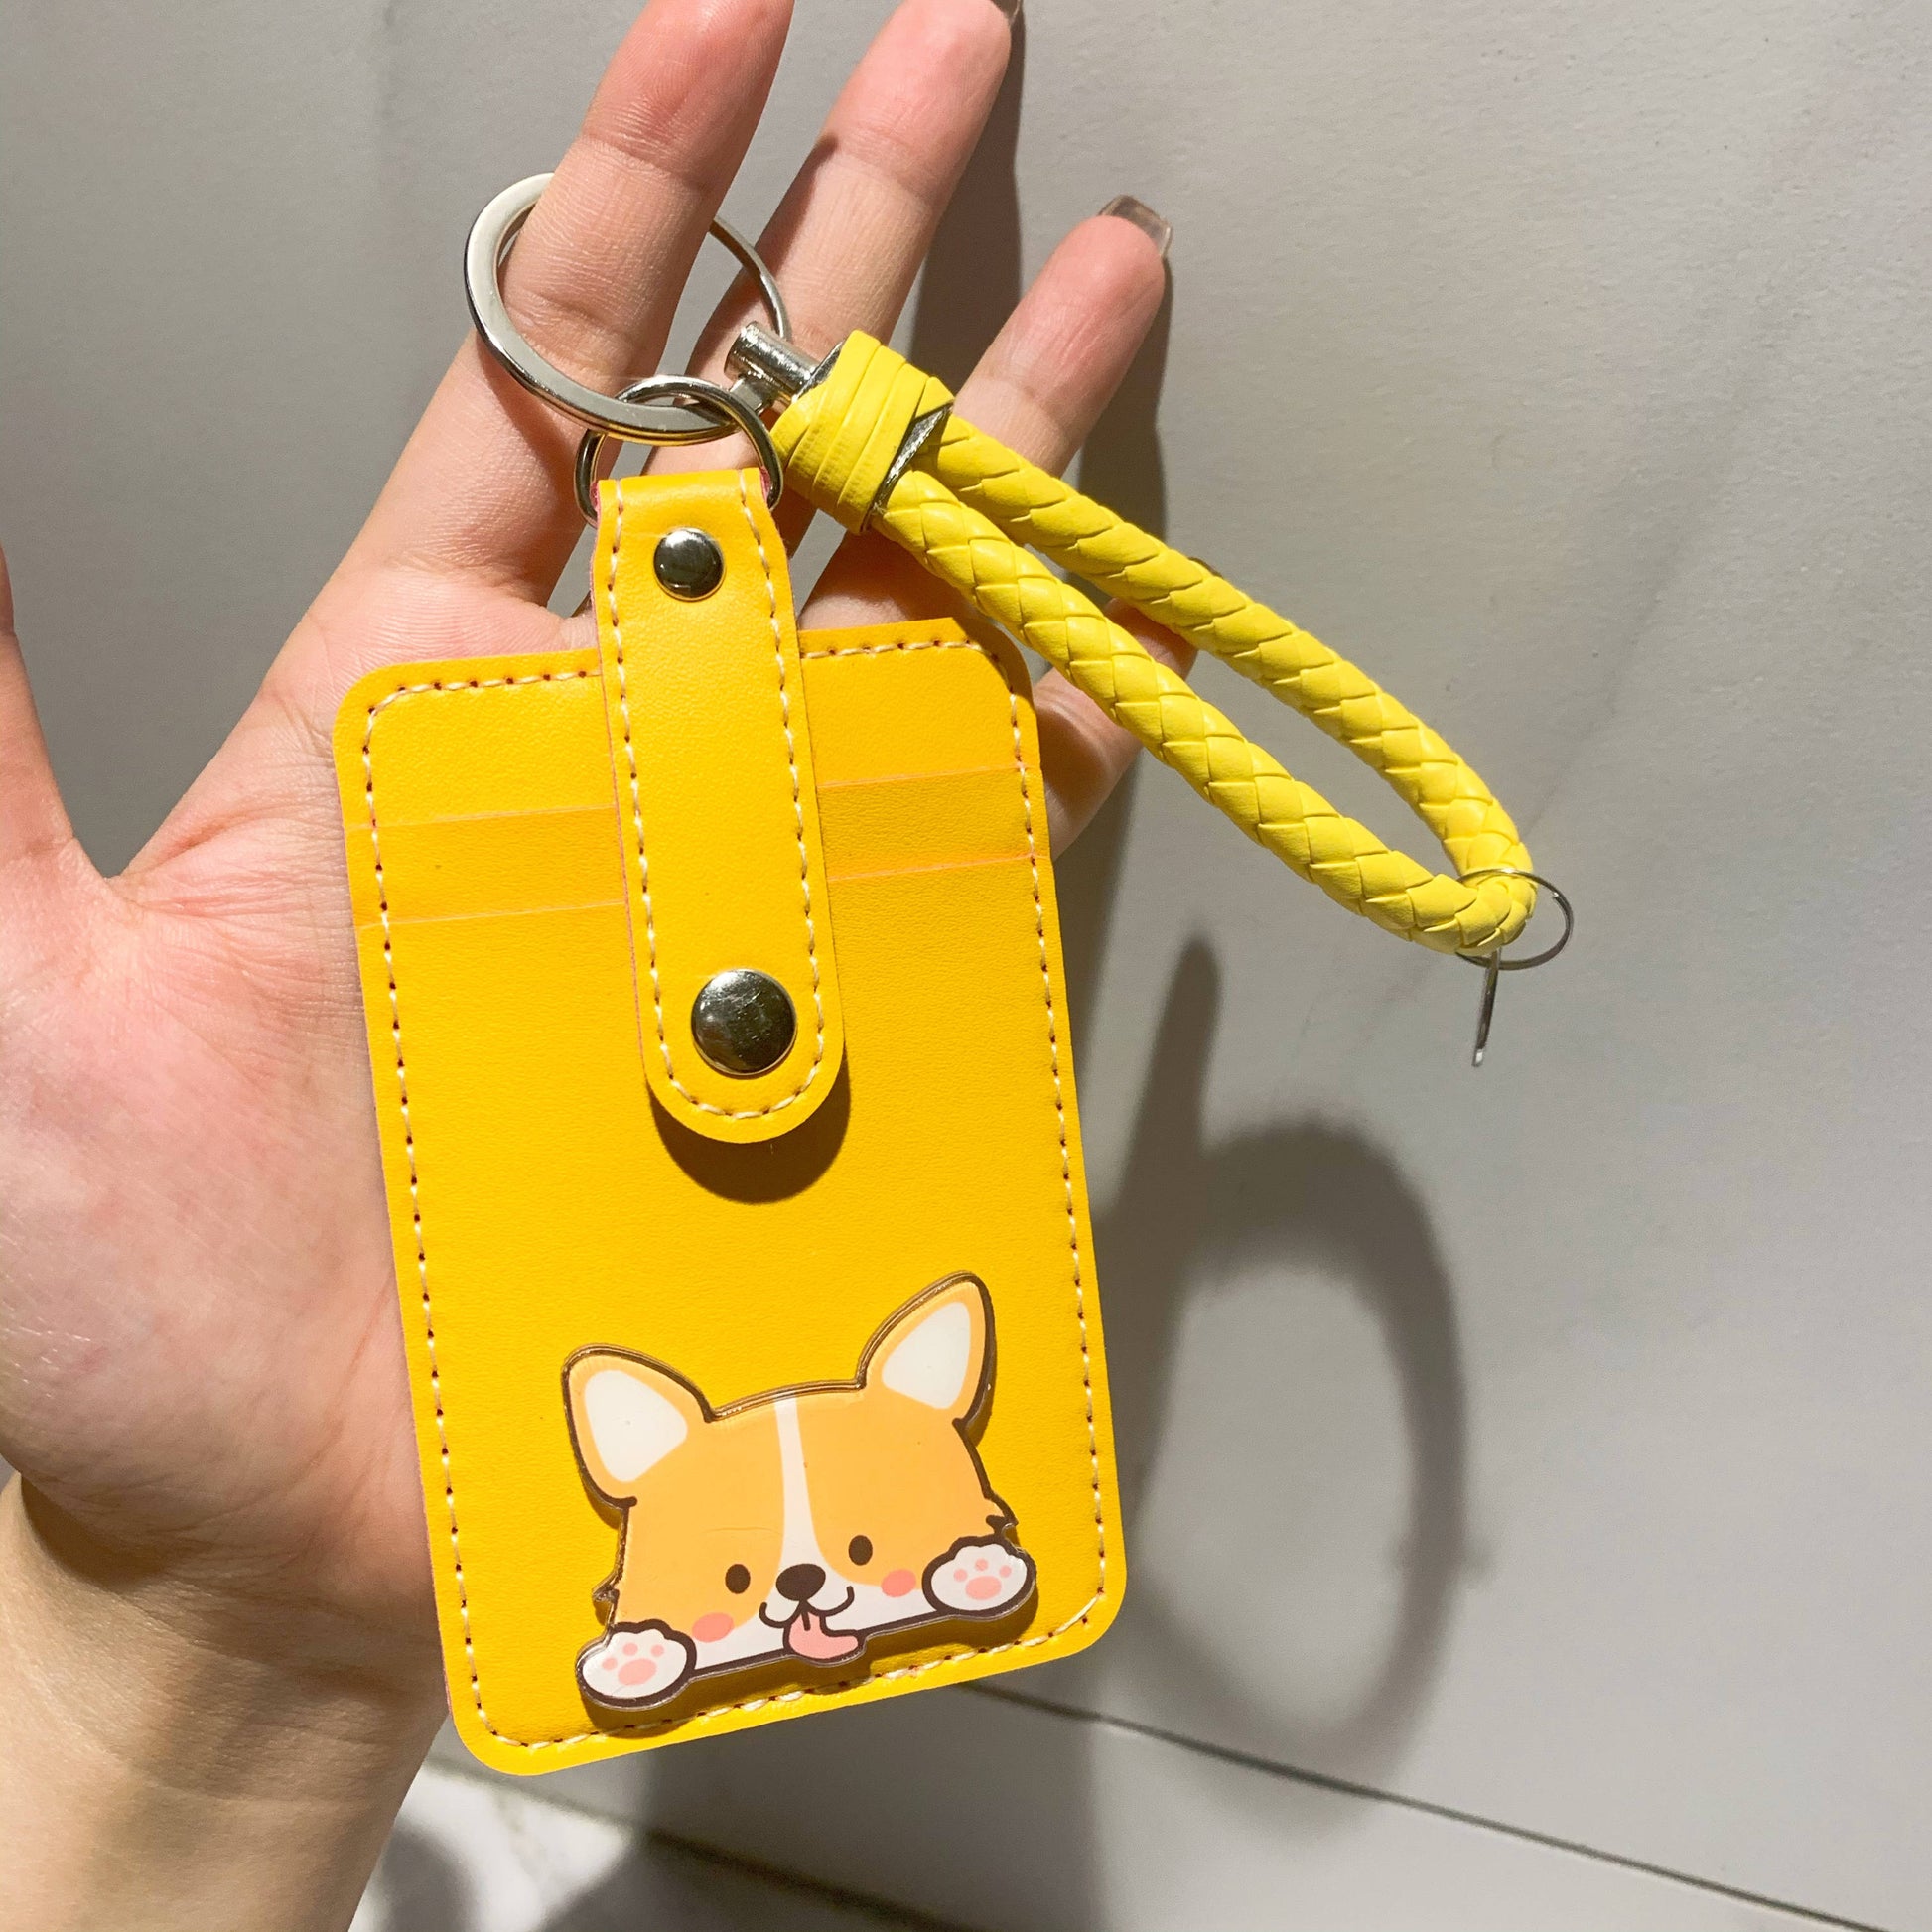 Cute corgi card bag - For The Pupple